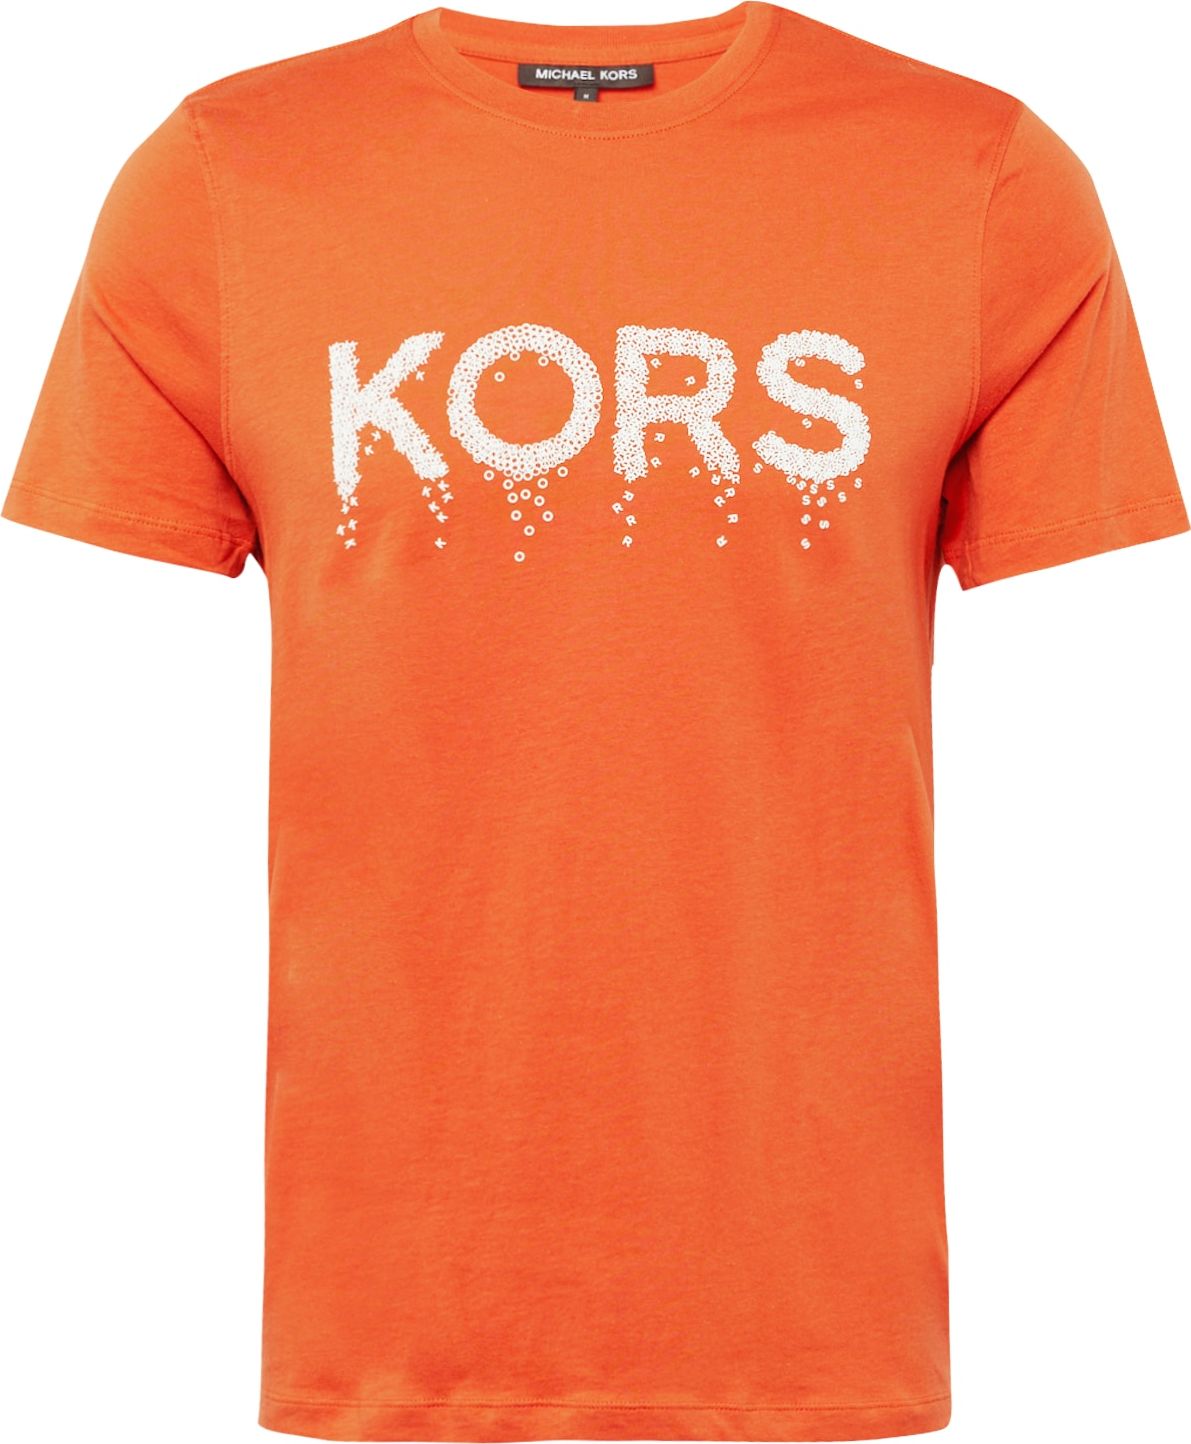 Tričko Michael Kors tmavě oranžová / bílá